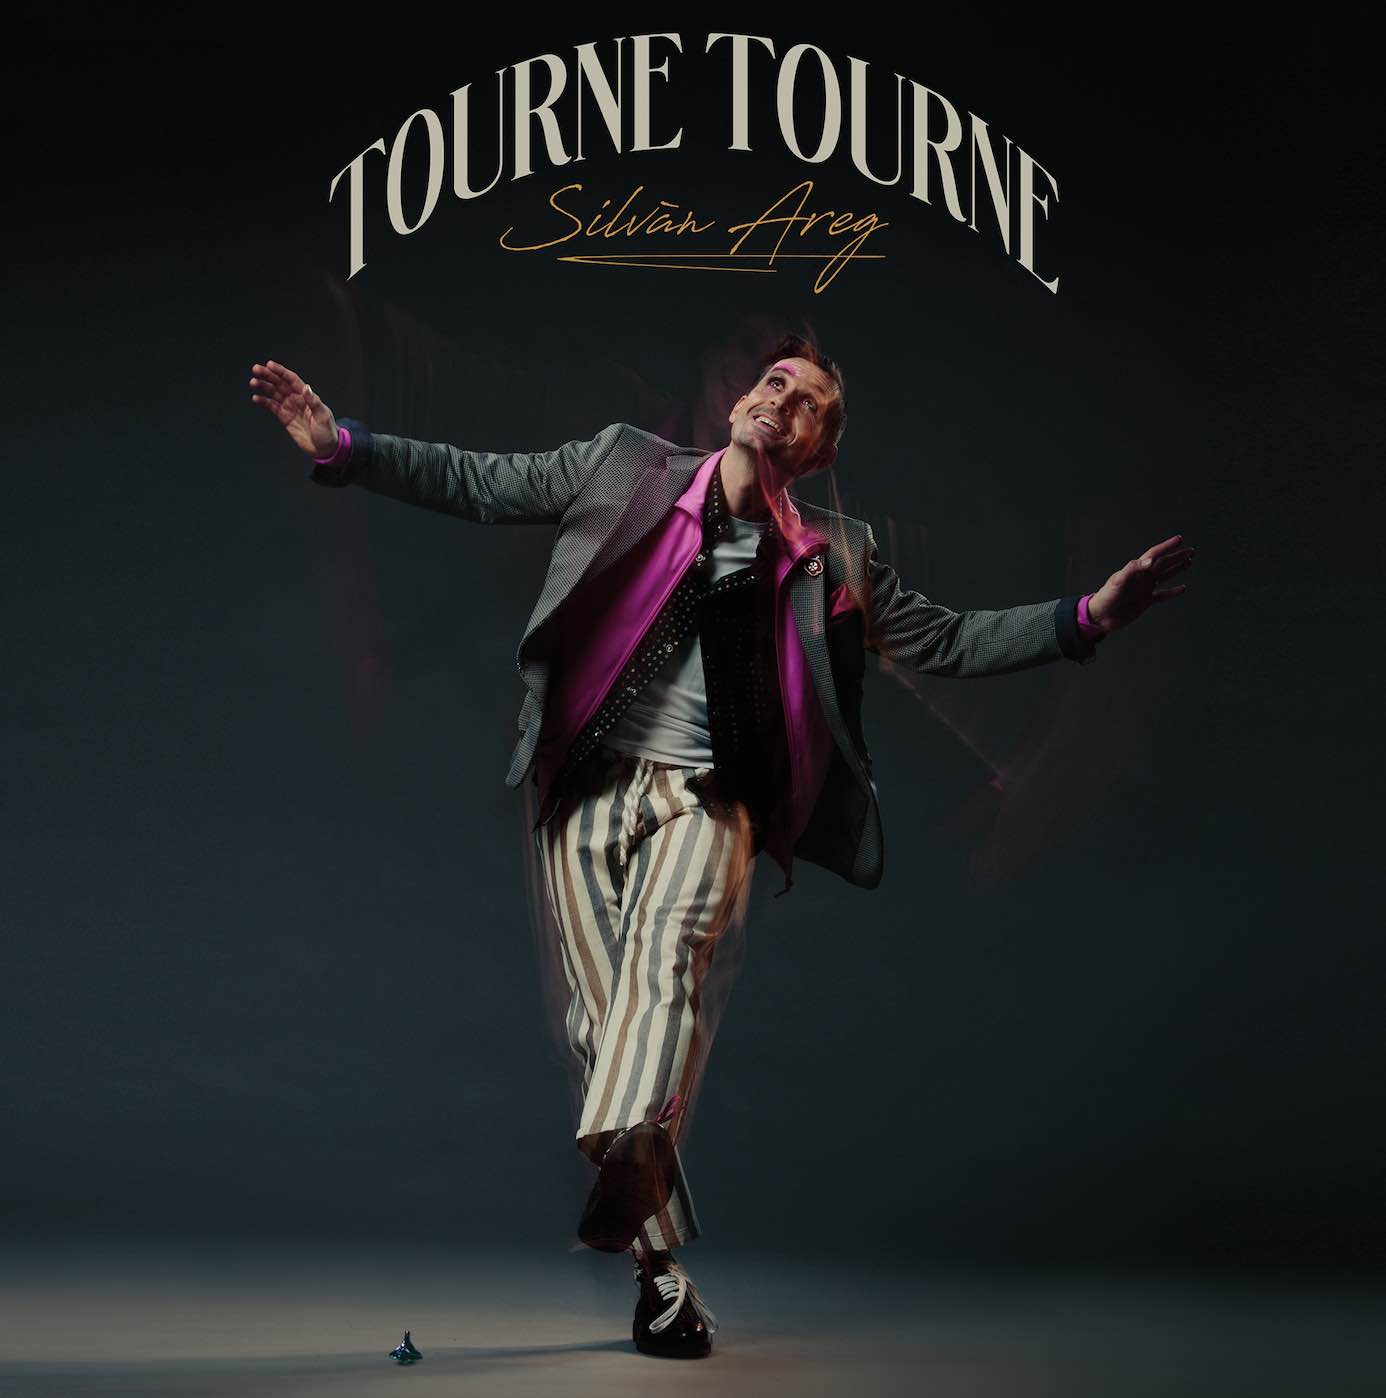 Silvan Areg - Tourne Tourne - single -